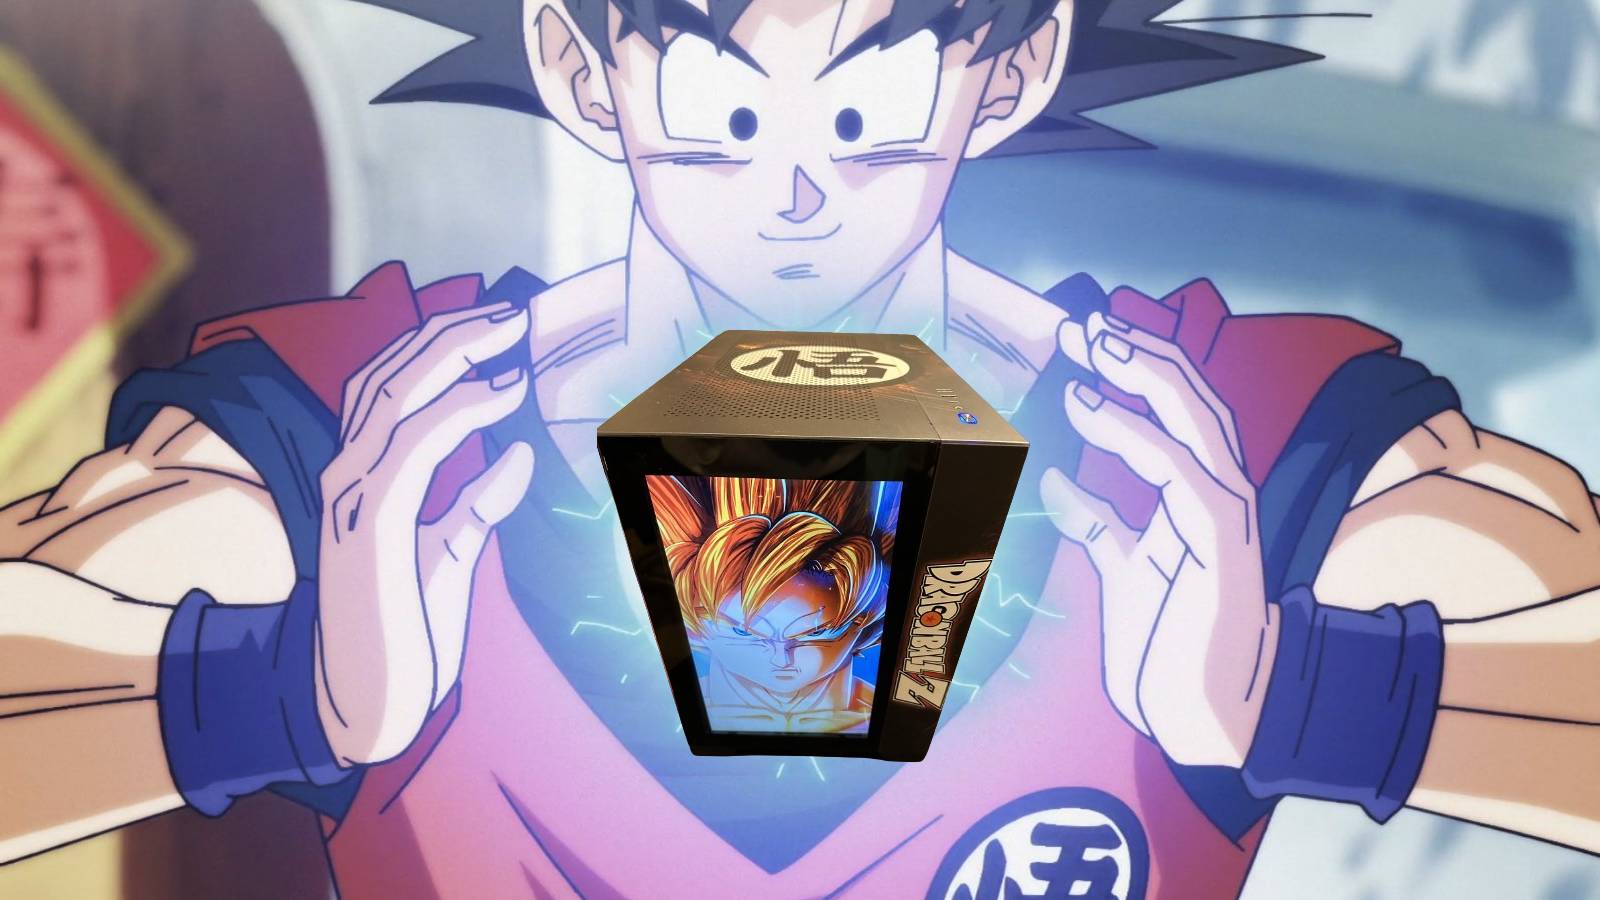 Screenshot of Goku holding a custom Dragon Ball Z gaming PC.